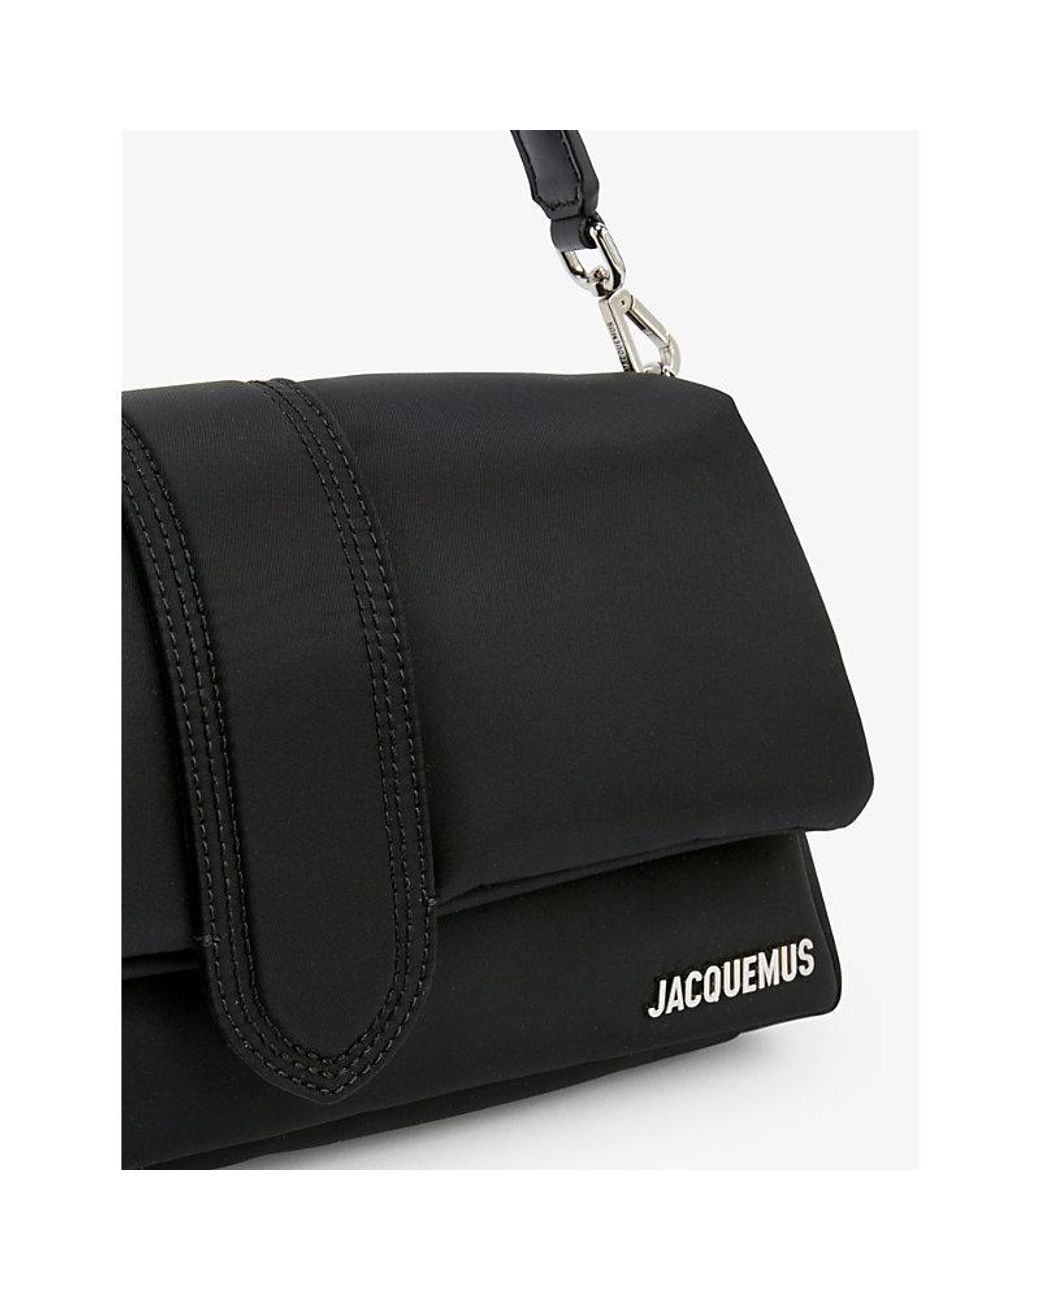 Jacquemus Le Bambimou Nylon Shoulder Bag in Black | Lyst